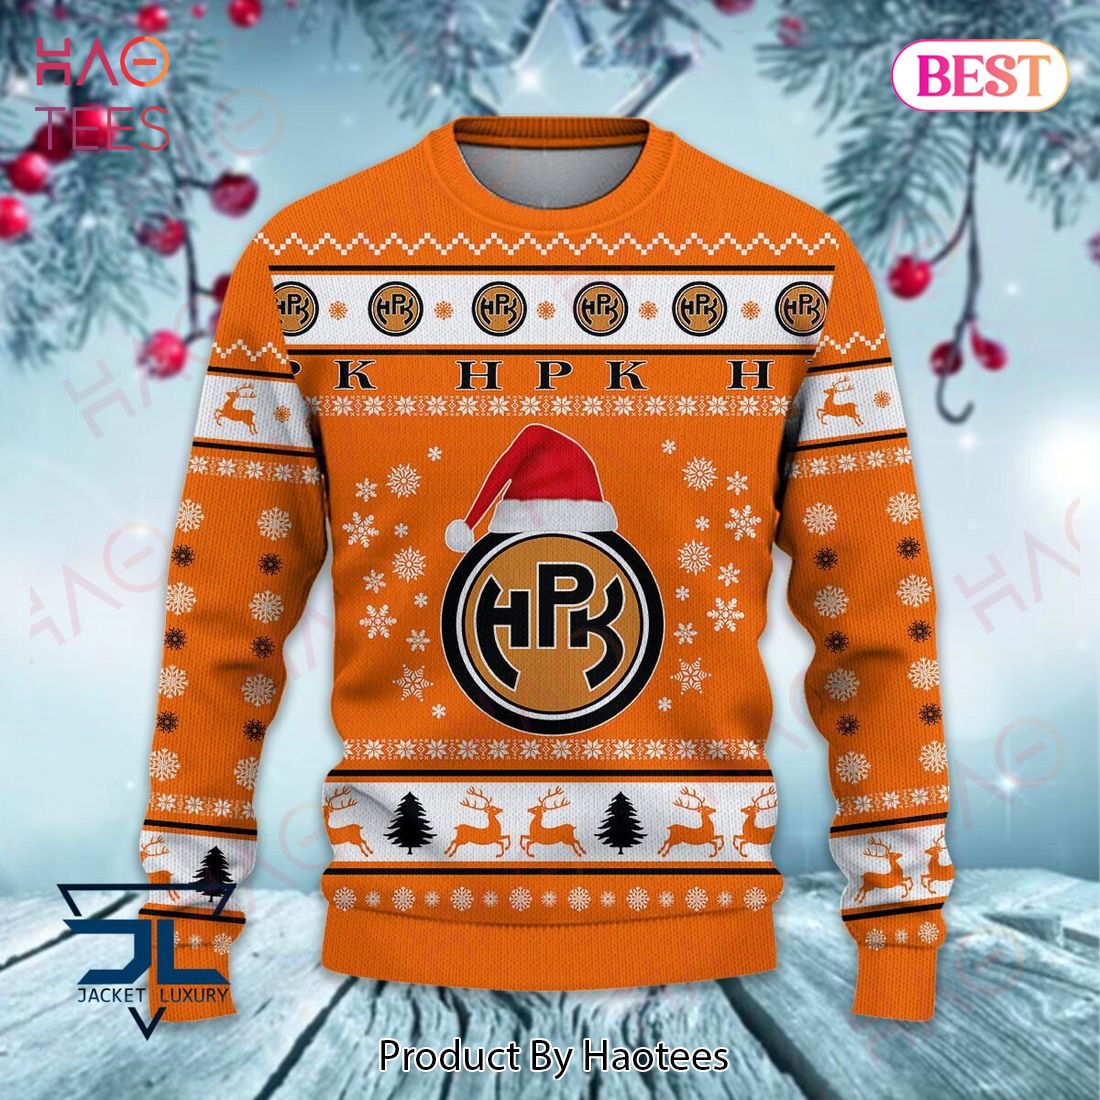 HPK White Mix Orange Christmas Luxury Brand Sweater Limited Edition